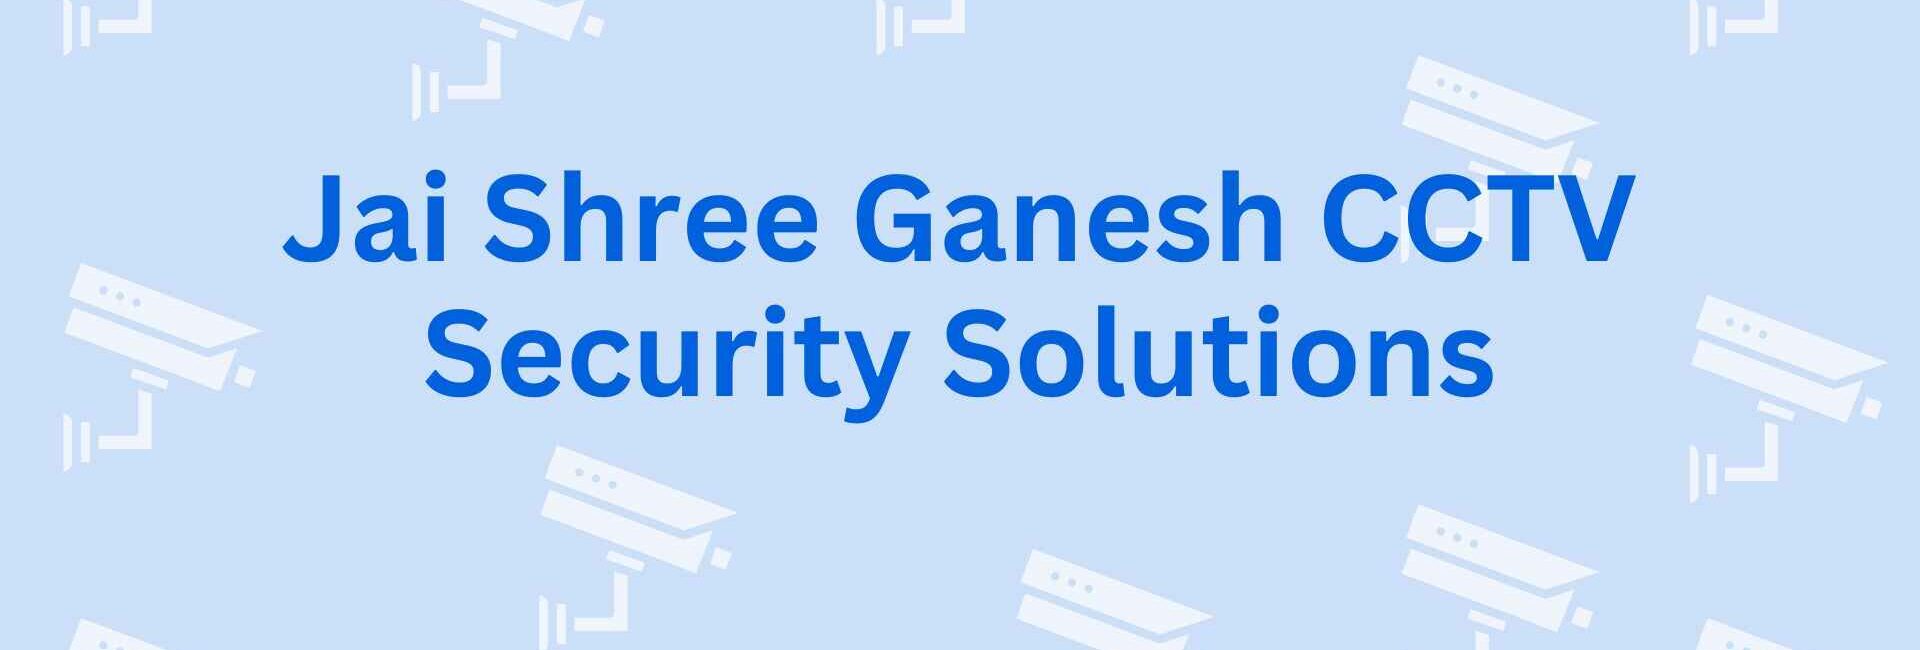 Jai Shree Ganesh CCTV Security Solutions - Best CCTV Dealer in Noida